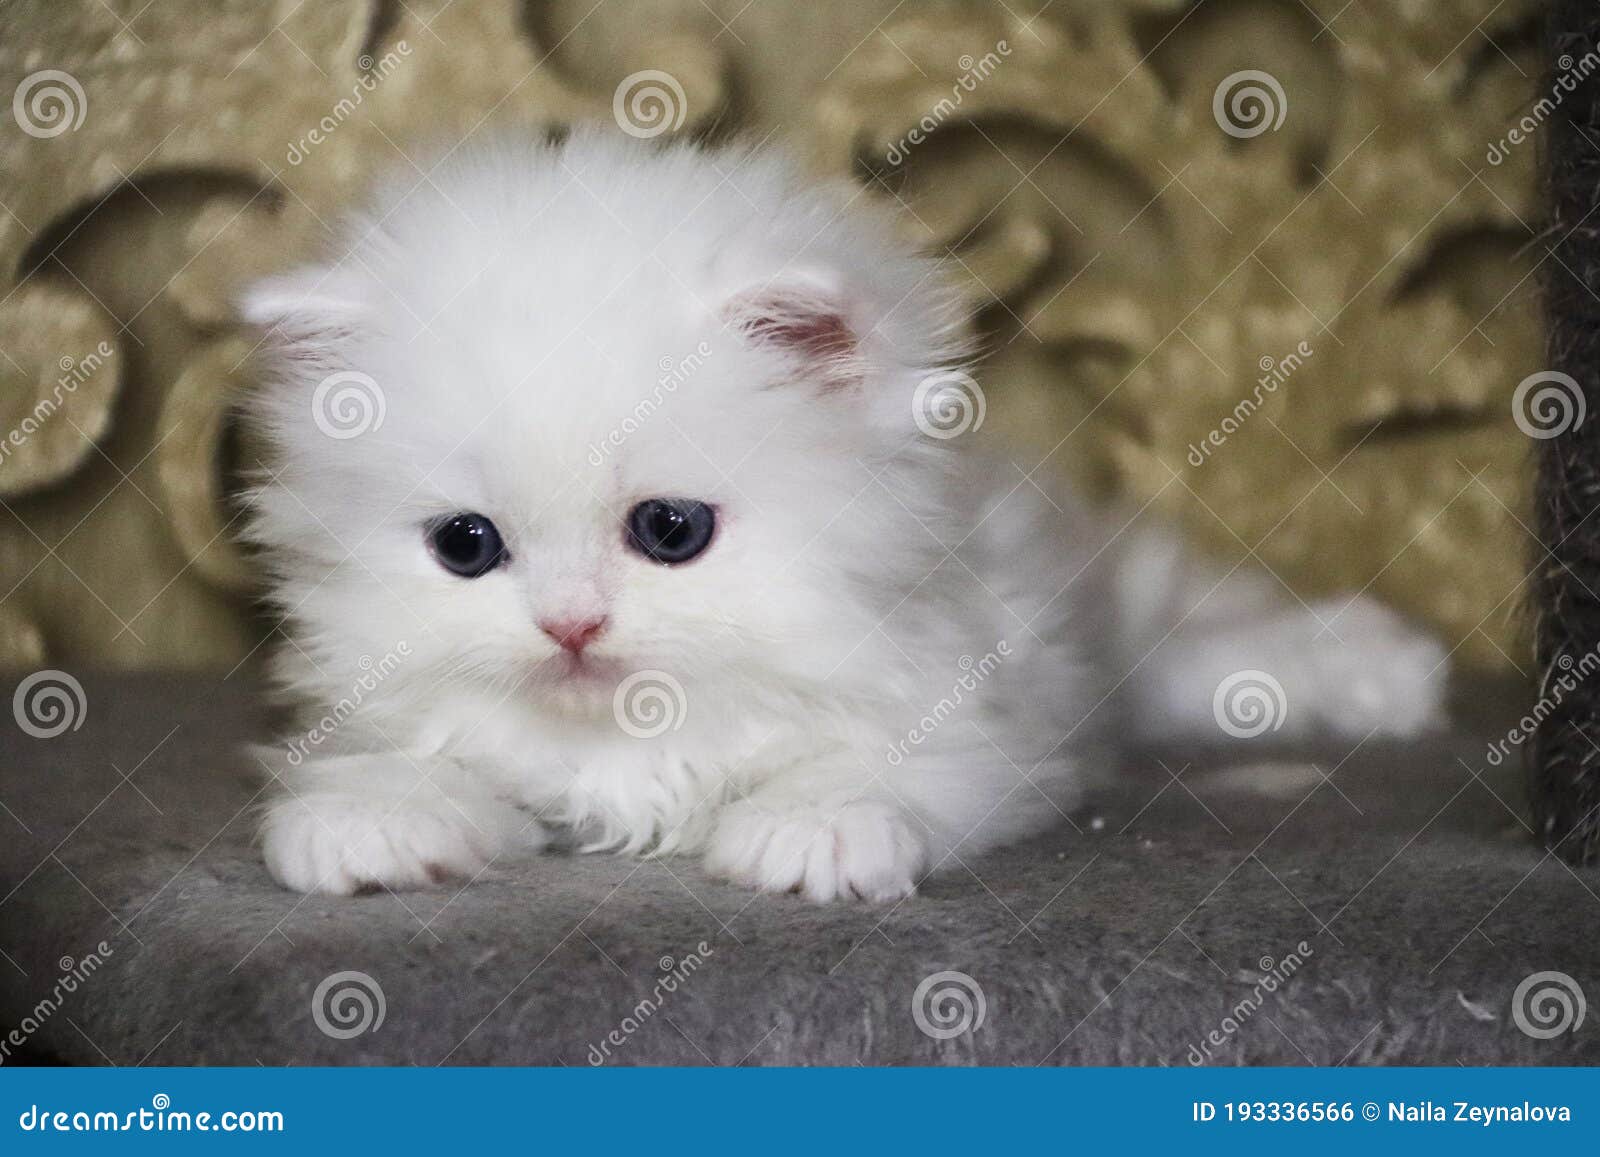 White Persian Little Kitten. Sweet Fluffy Kitty. Blue Eyes. Ornate  Background Stock Photo - Image of decorative, breed: 193336566